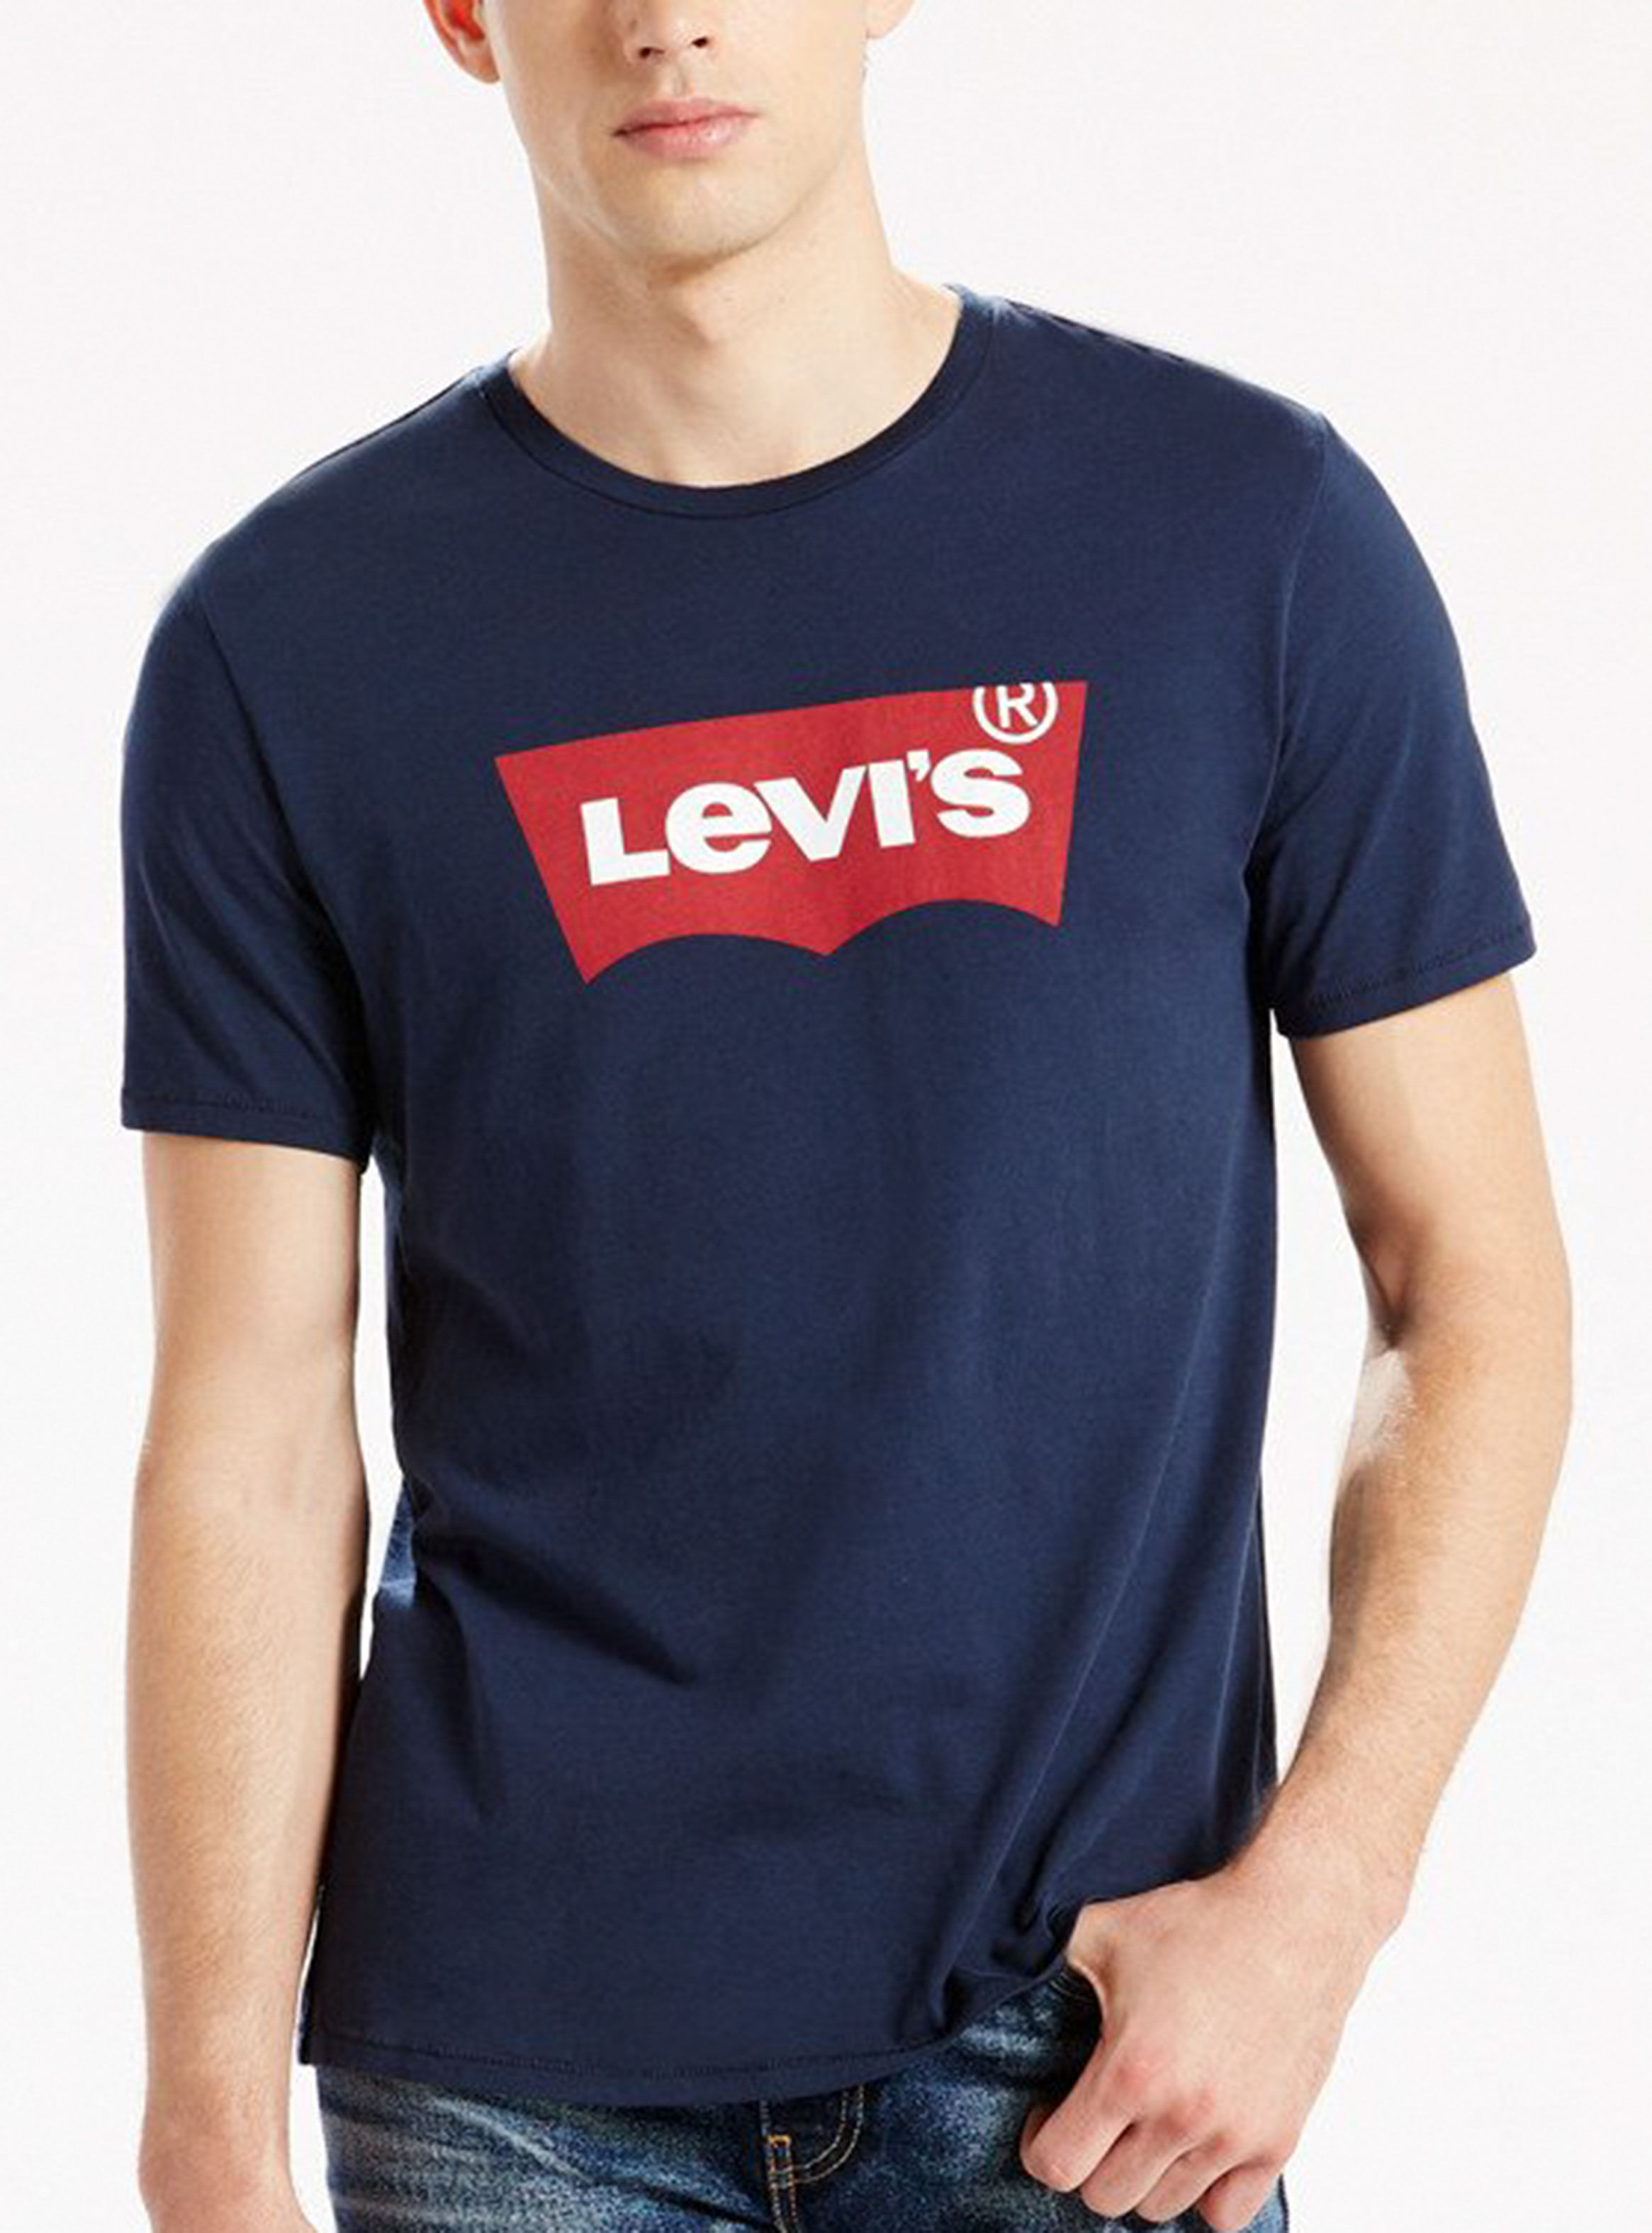 Лев ис. Levis Red Tee. Levis t Shirt Mens. Футболка мужская Levi's. Футболка Левис мужские.